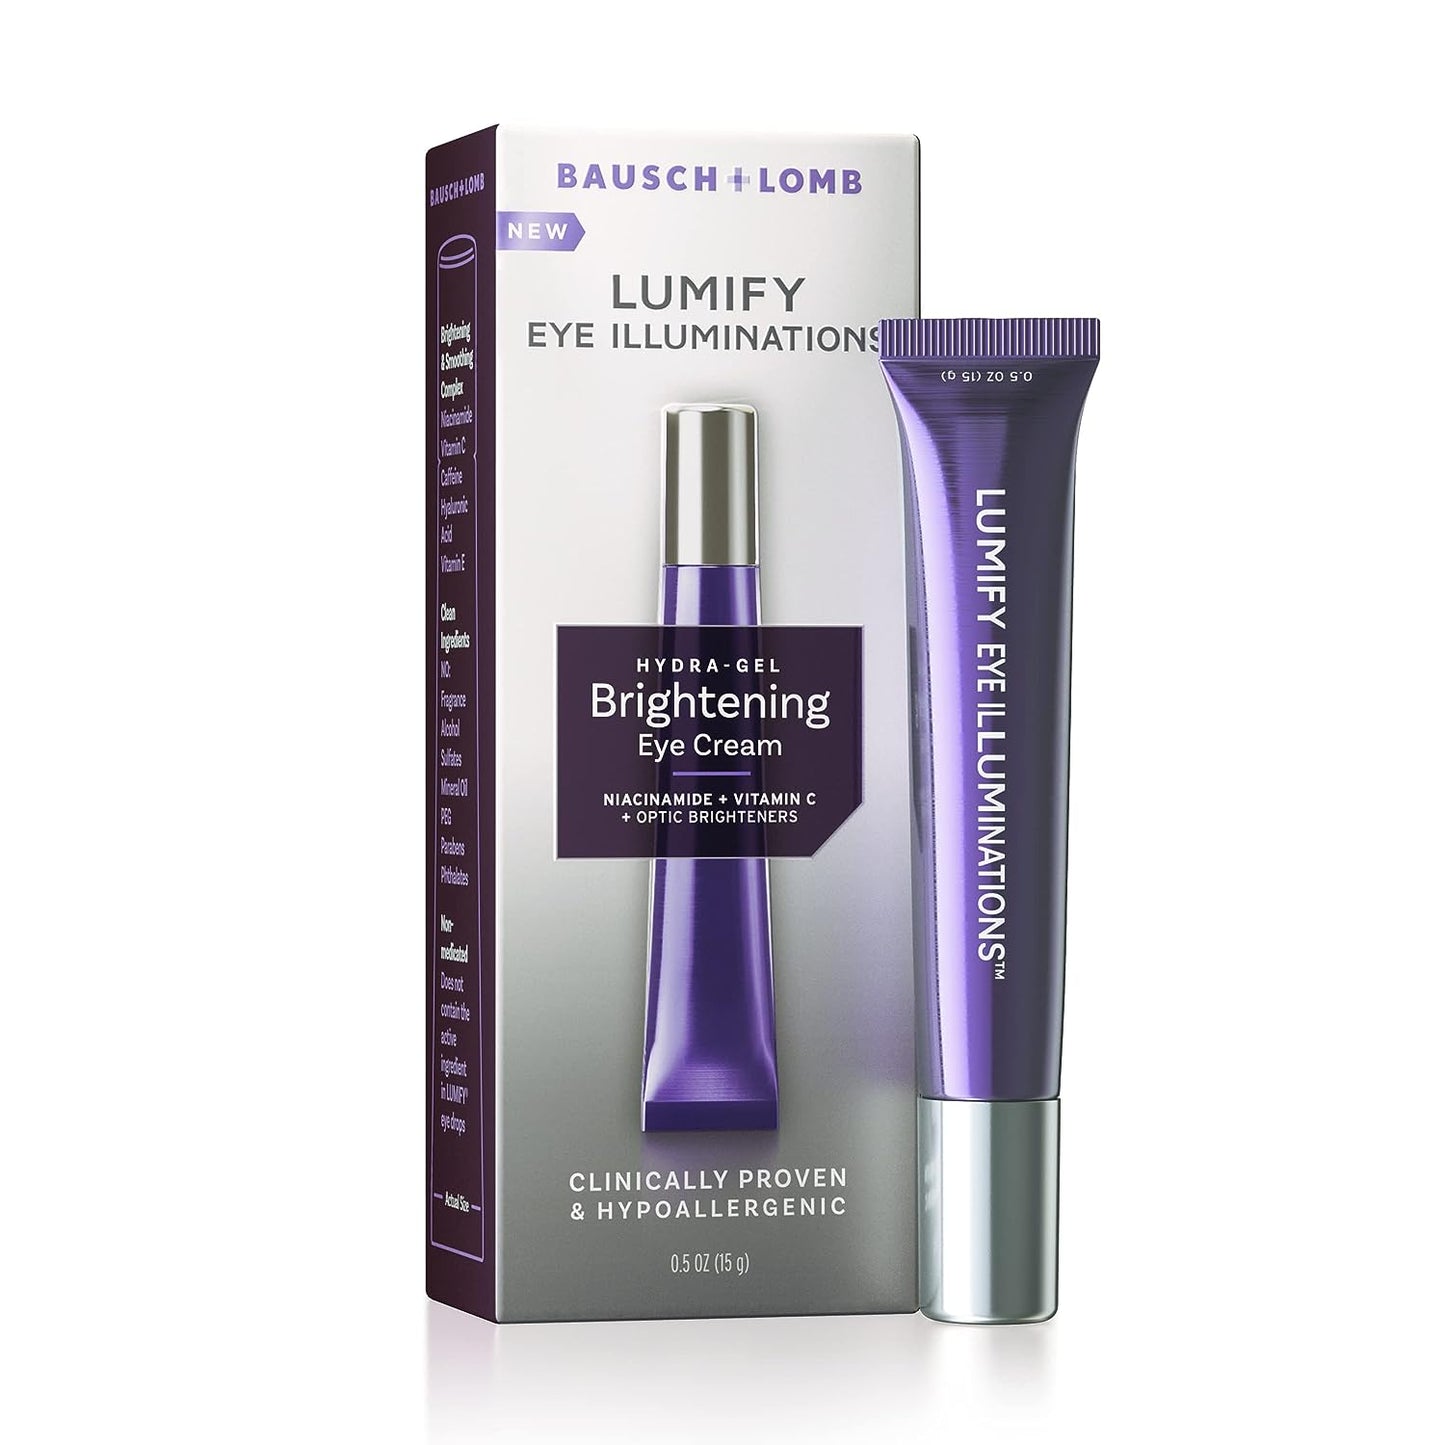 LUMIFY Eye Illuminations Hydra-Gel Brightening Eye Cream 15g